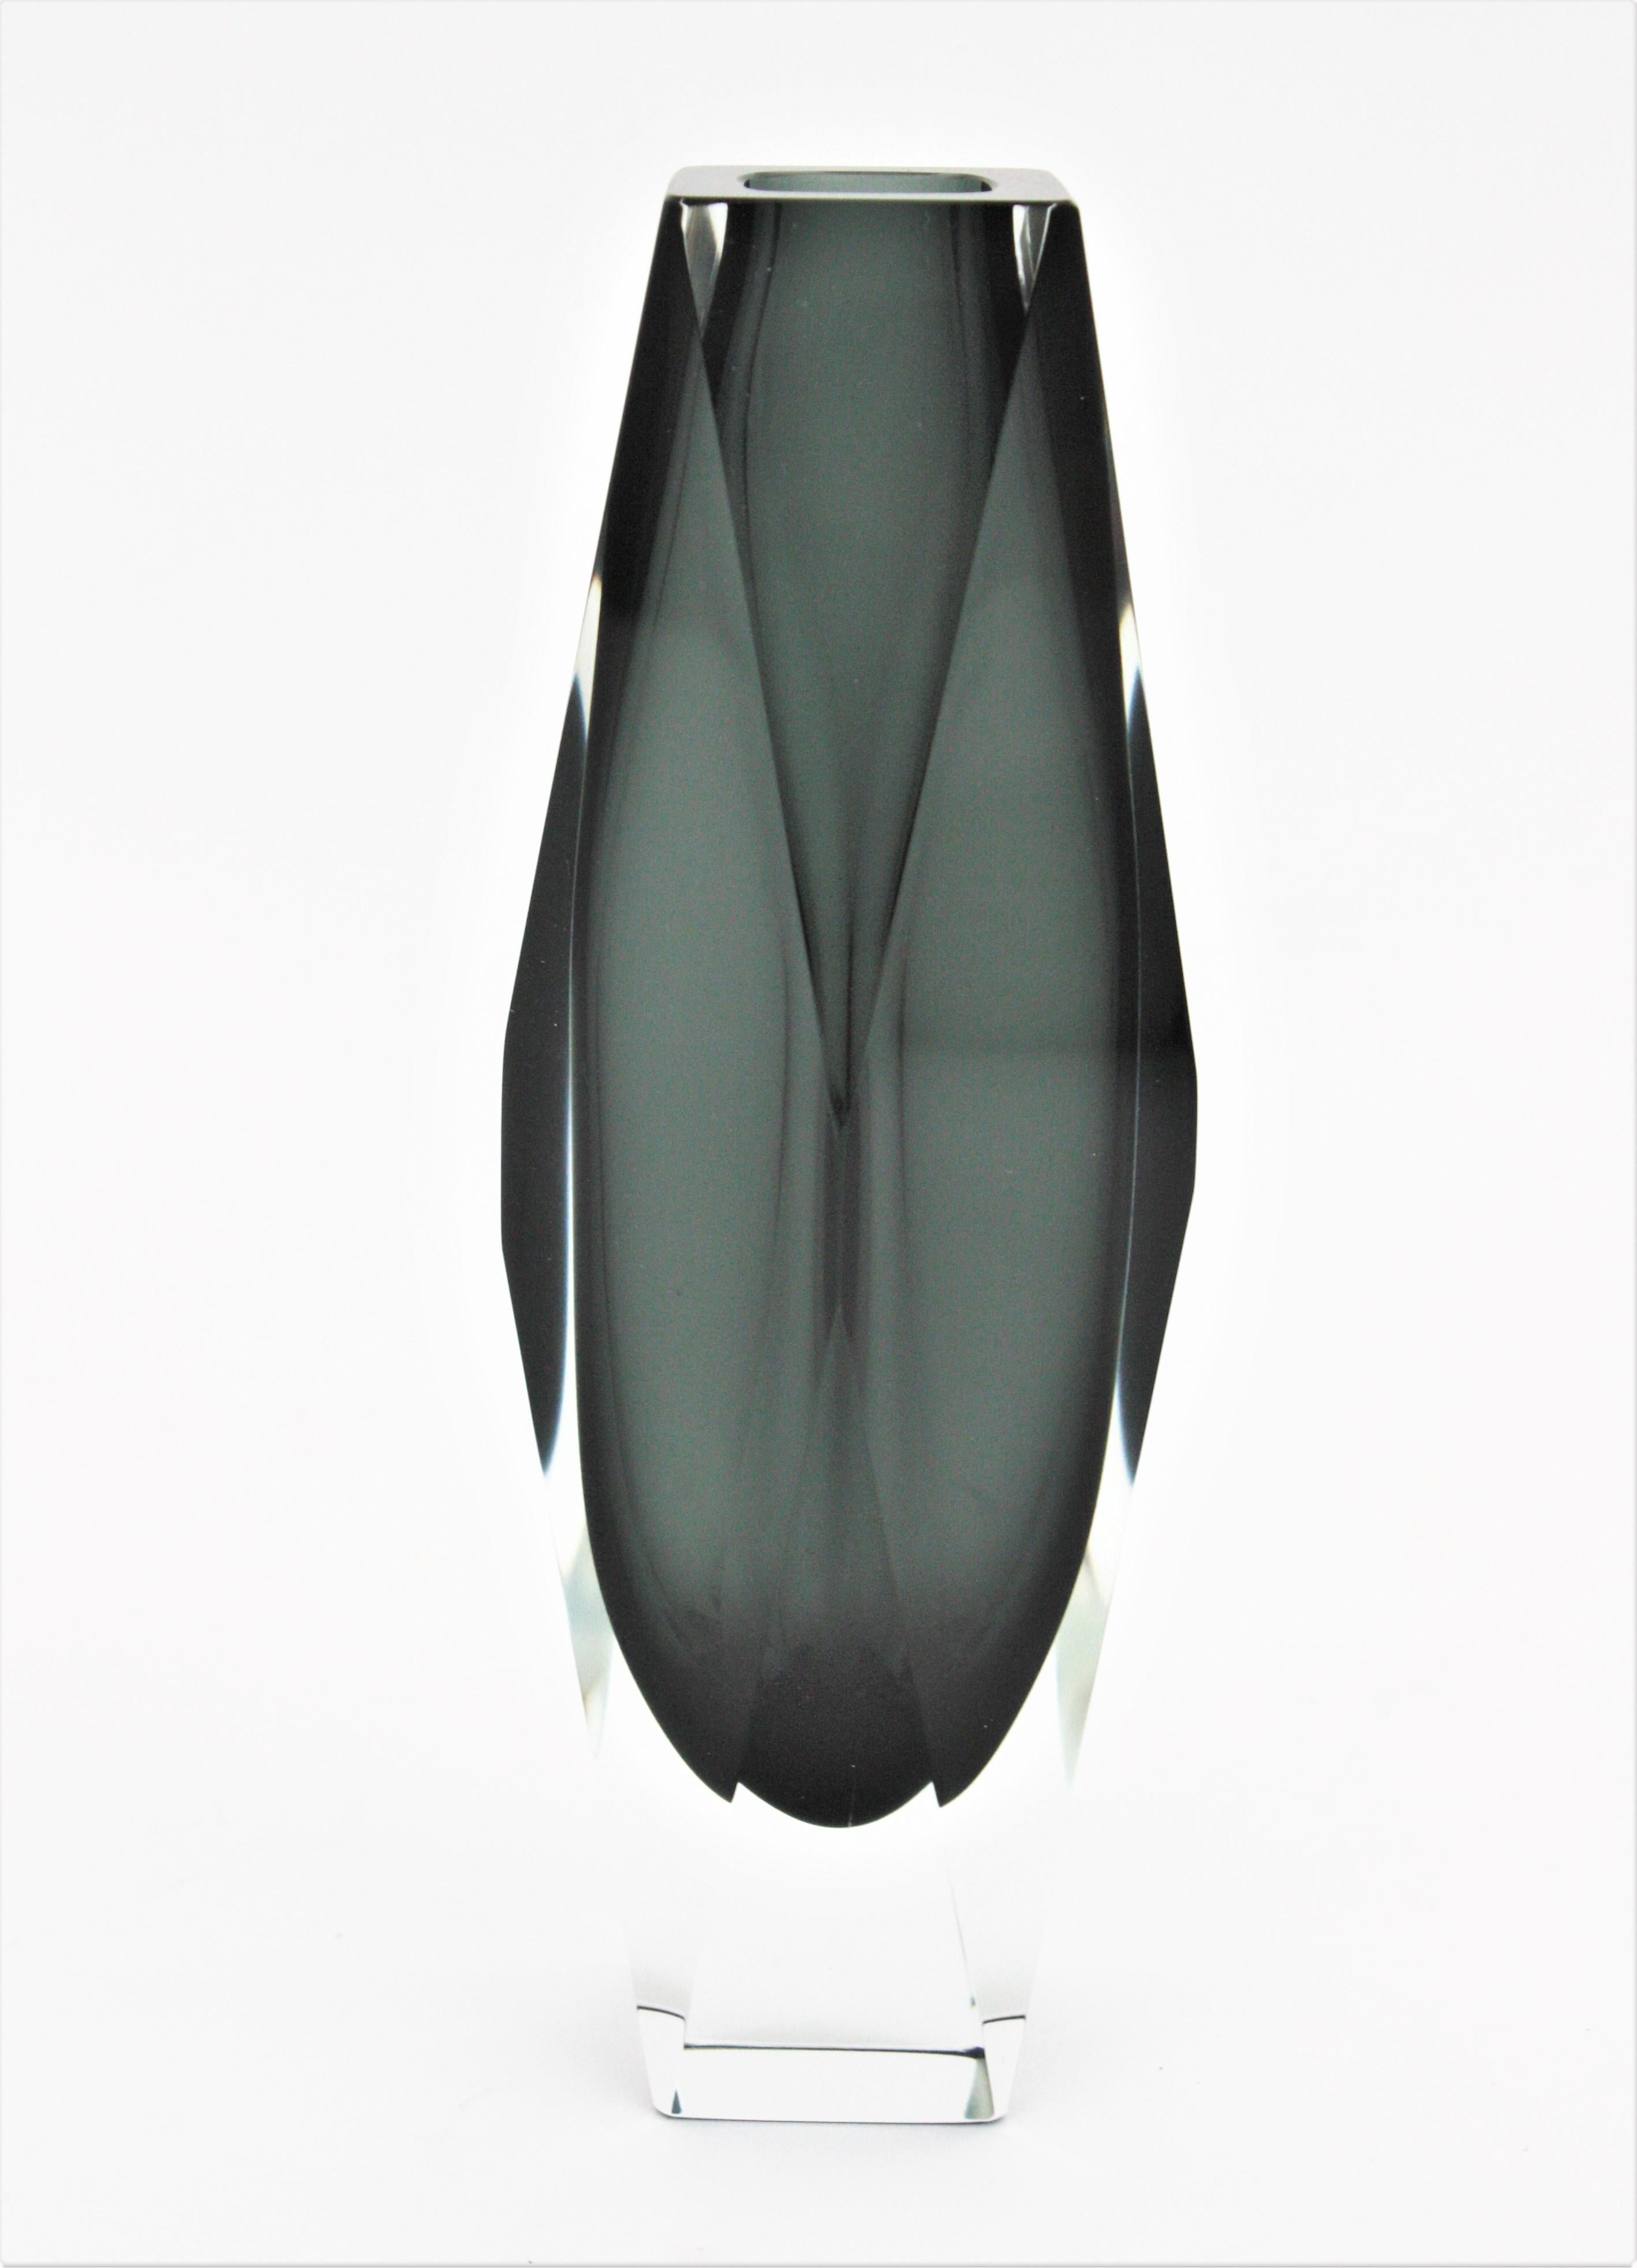 Riesige Mandruzzato Murano Sommerso-Vase aus Rauchgrauem, klarem, facettiertem Kunstglas im Angebot 5